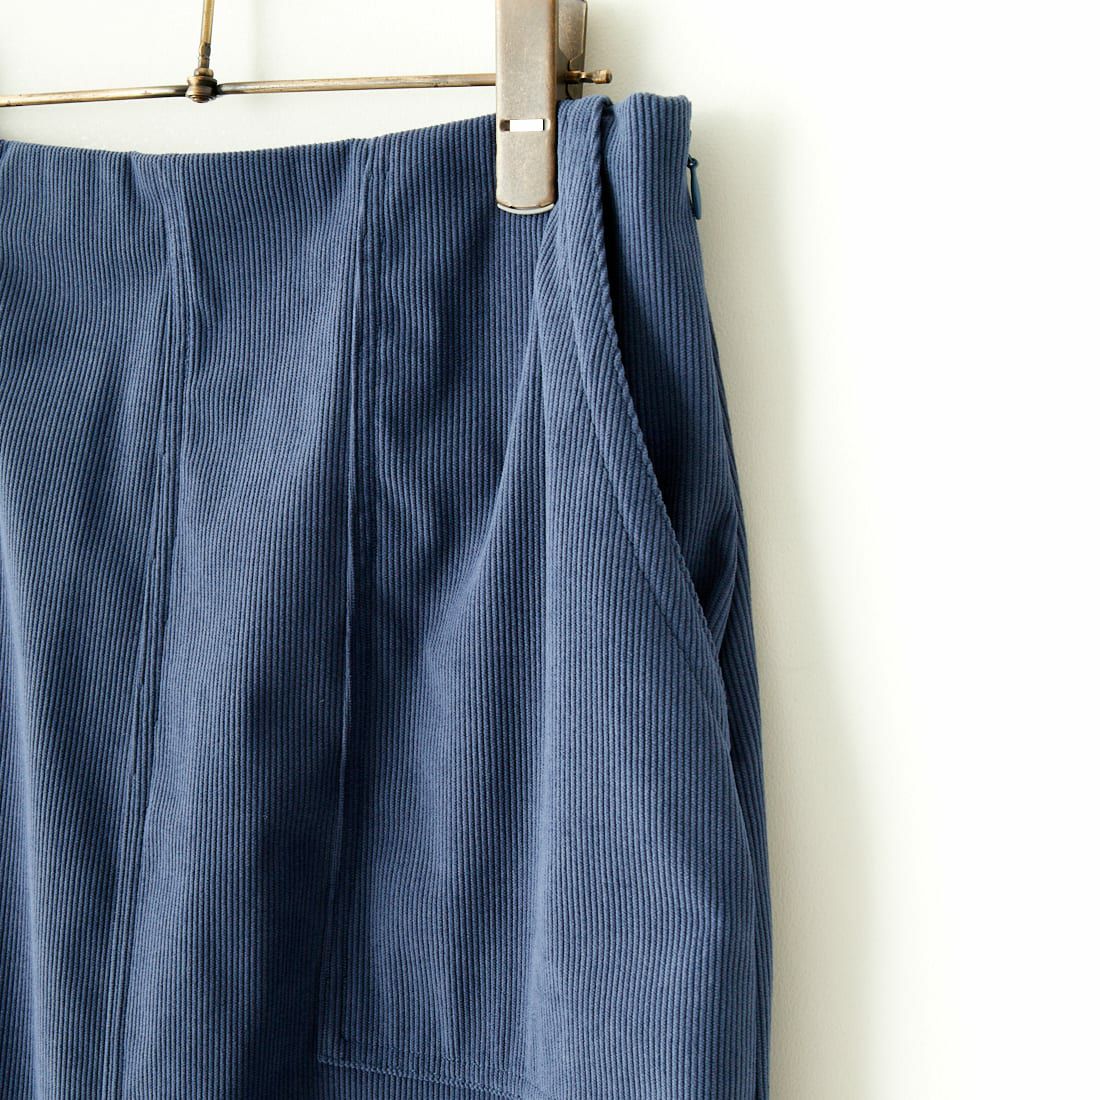 Jeans Factory Clothes [ジーンズファクトリークローズ] コーデュロイベイカースカート [IWJF-02] BLUE